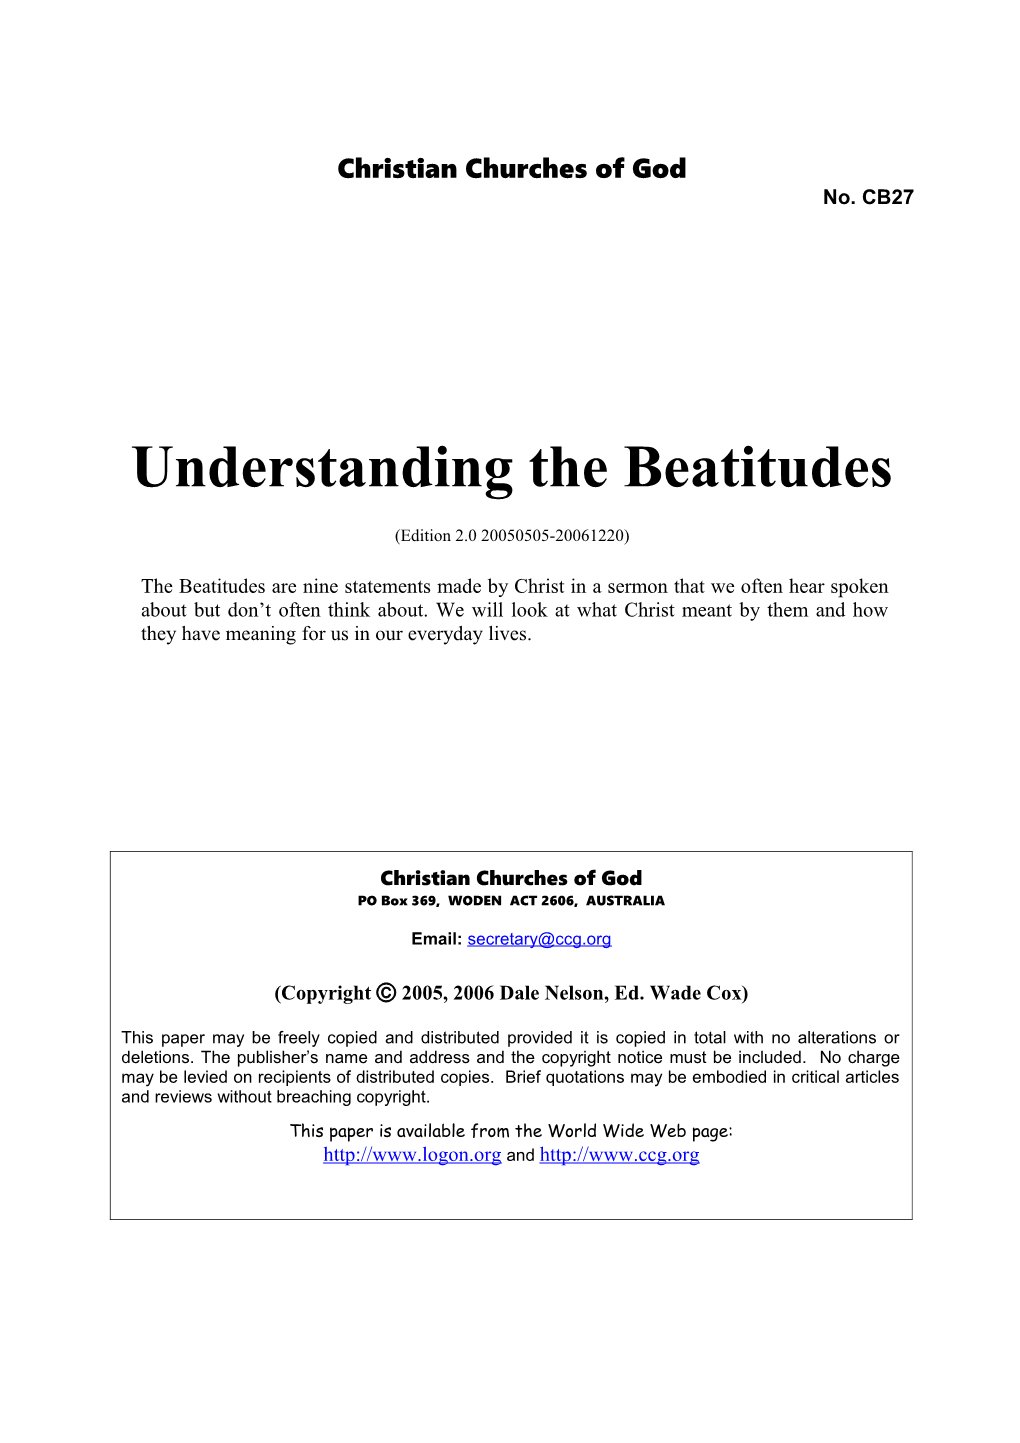 Understanding the Beatitudes (No. CB27)